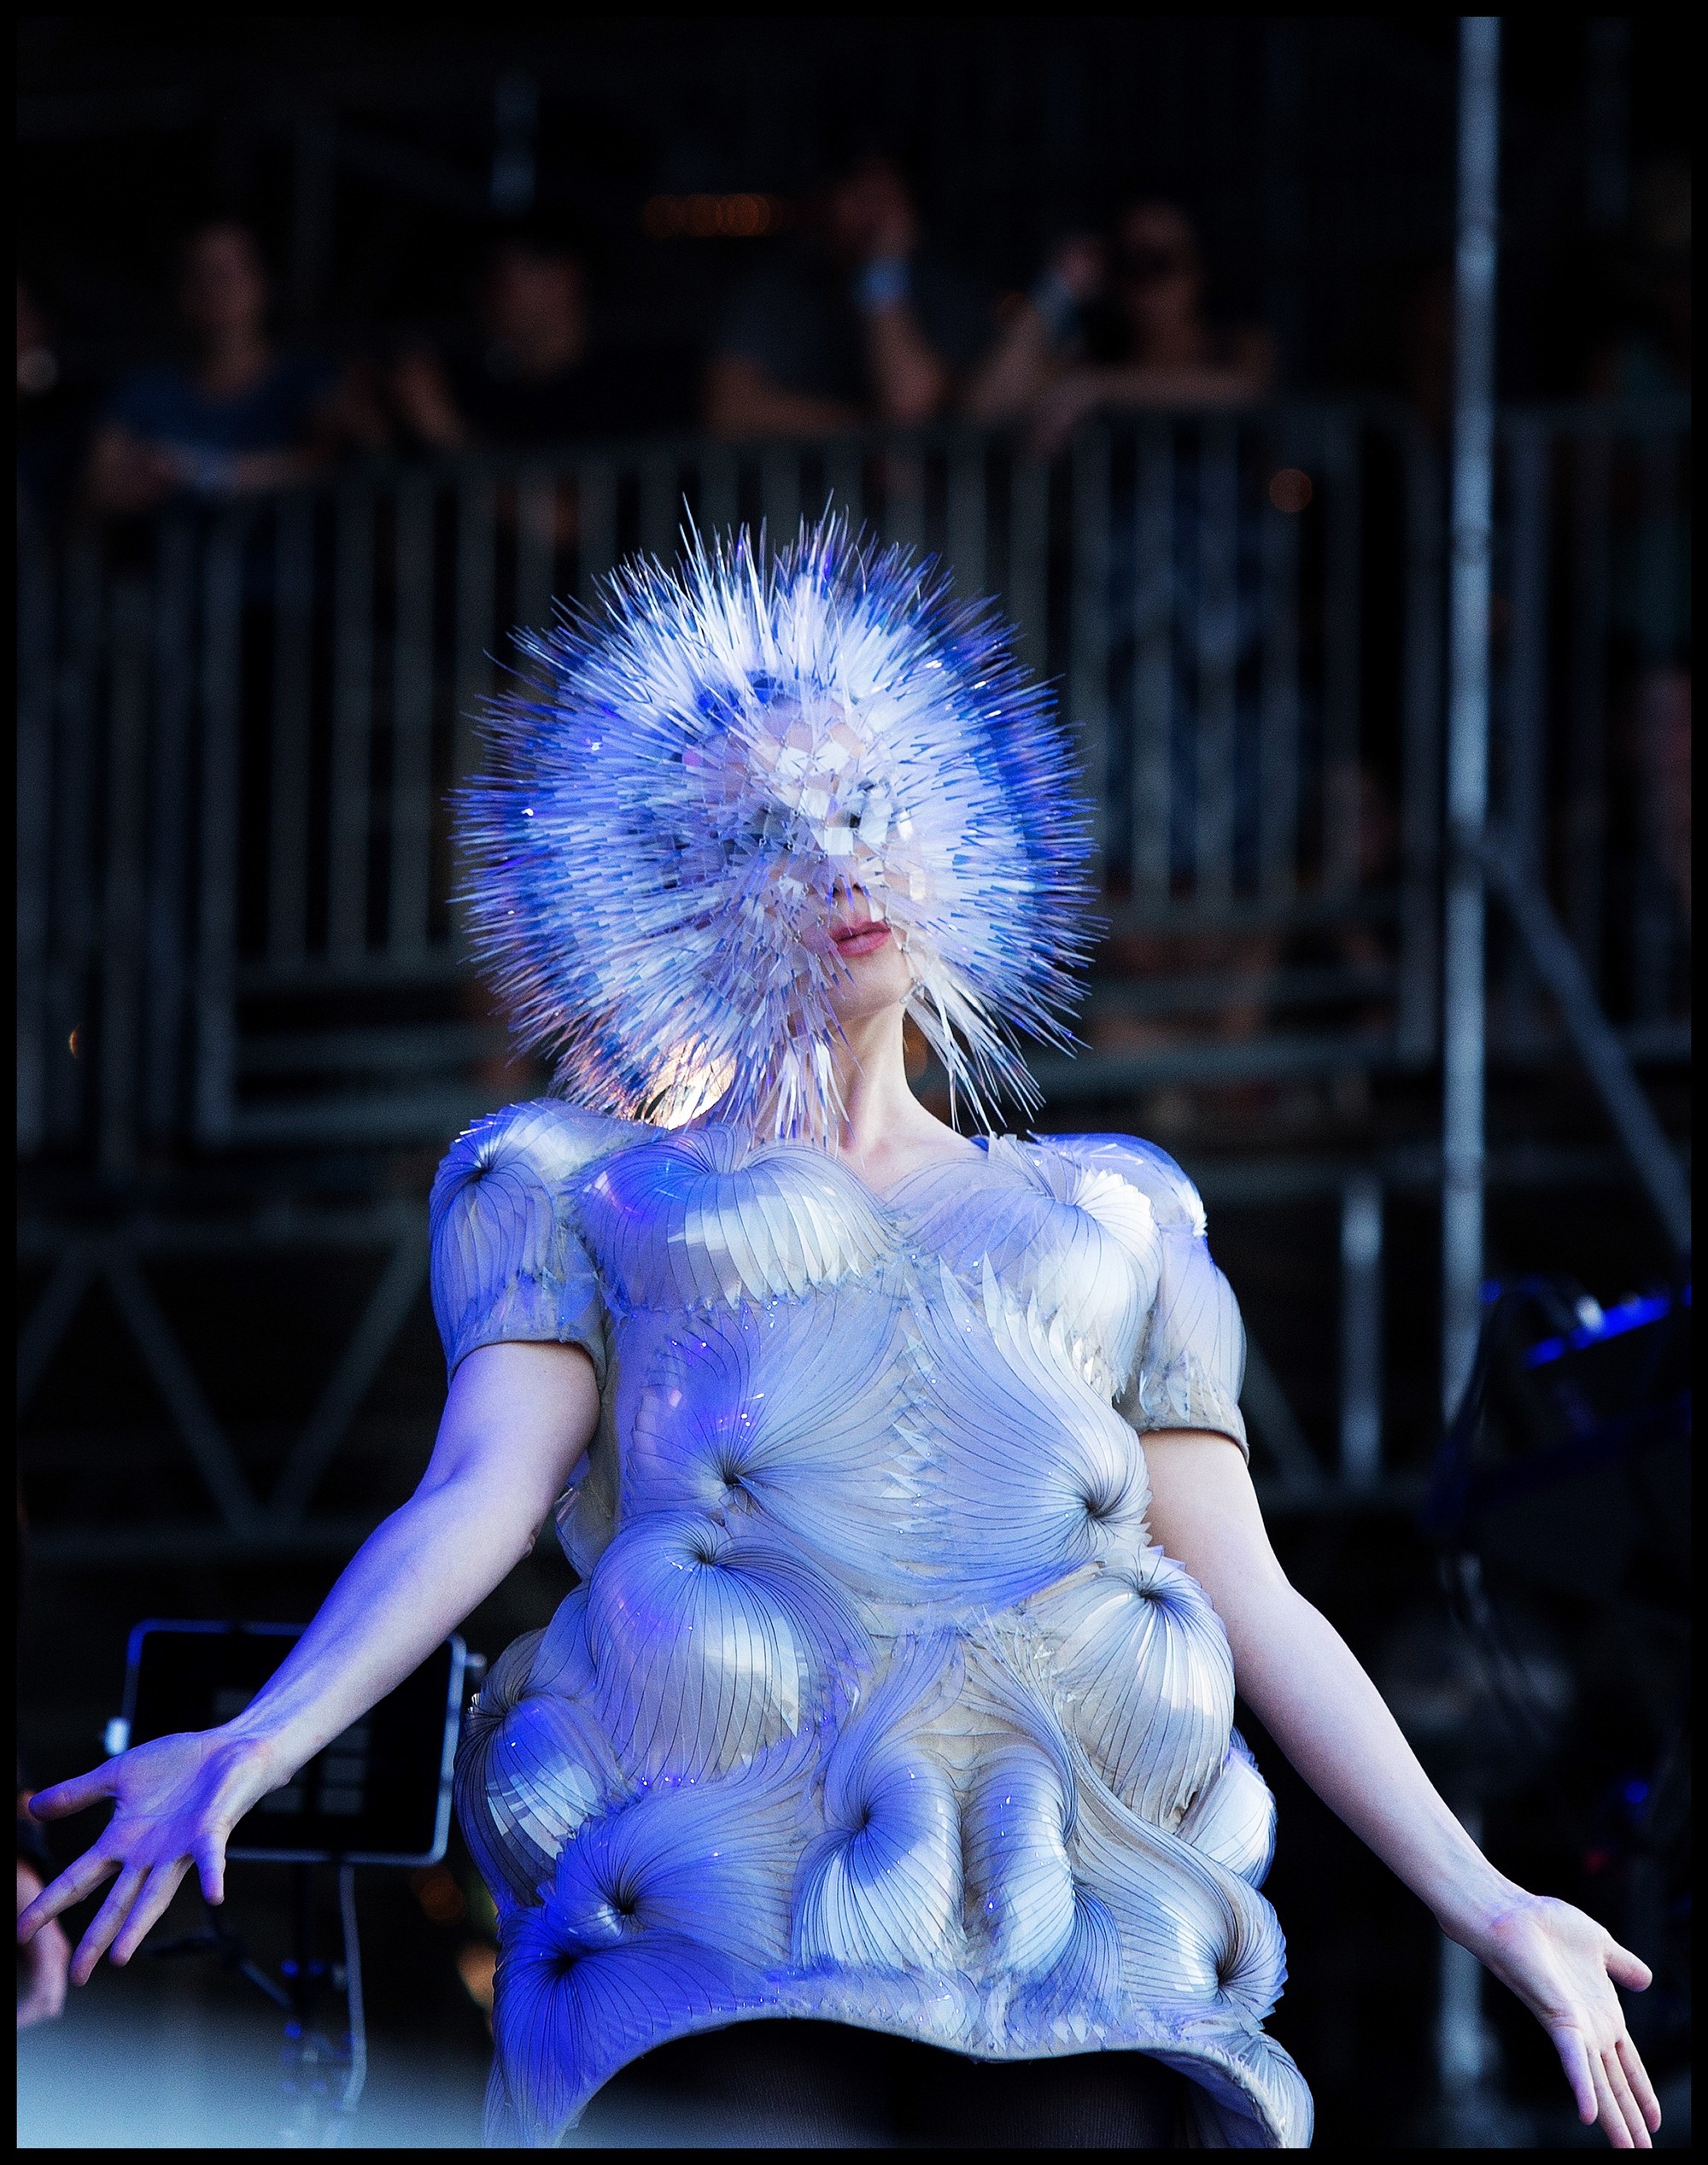 Björk at MoMA shows how she transformed pop | Dazed